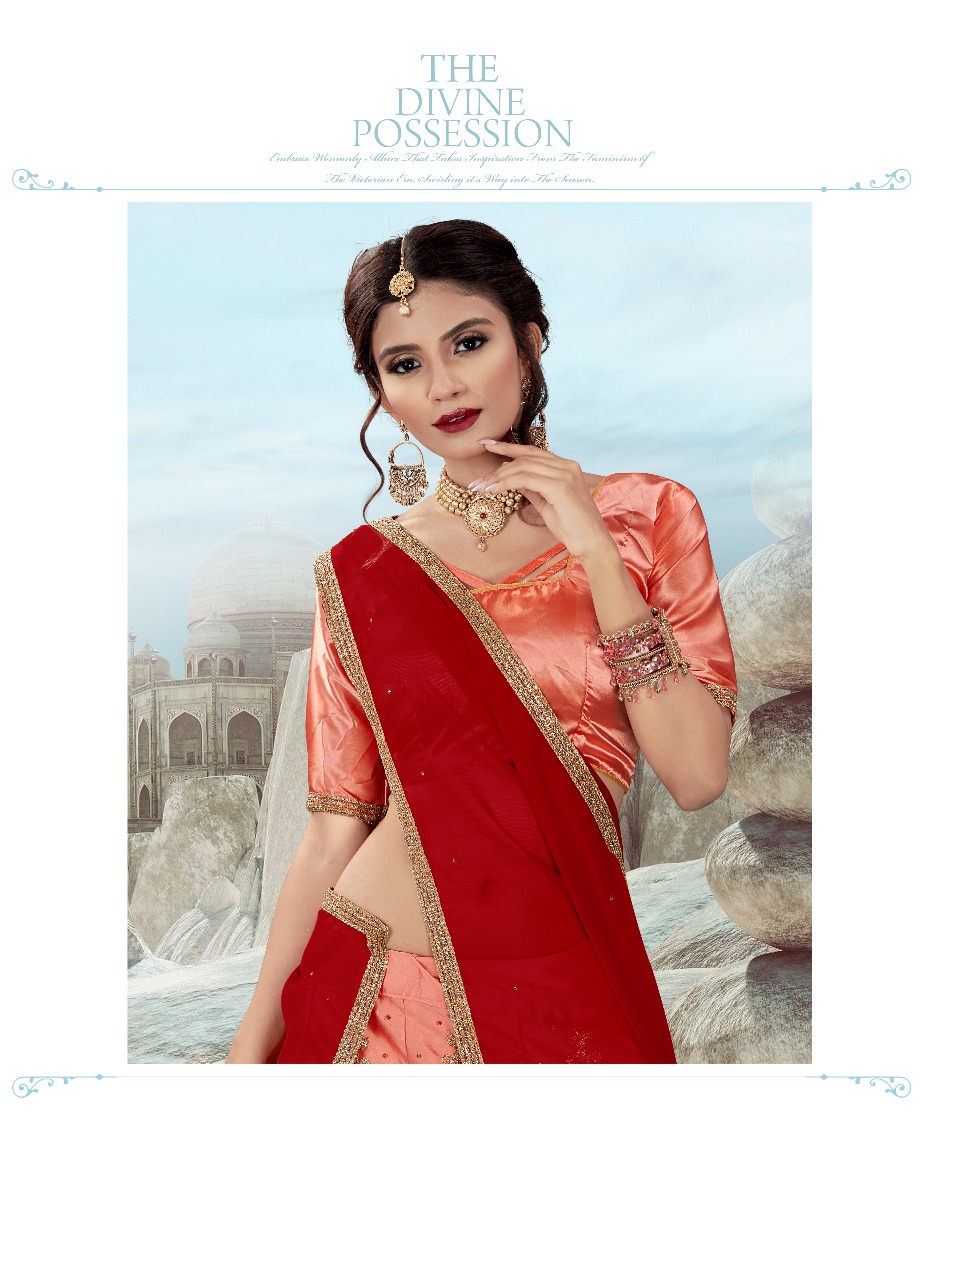 Sanskar style launch amaze exclusive collection of lehenga